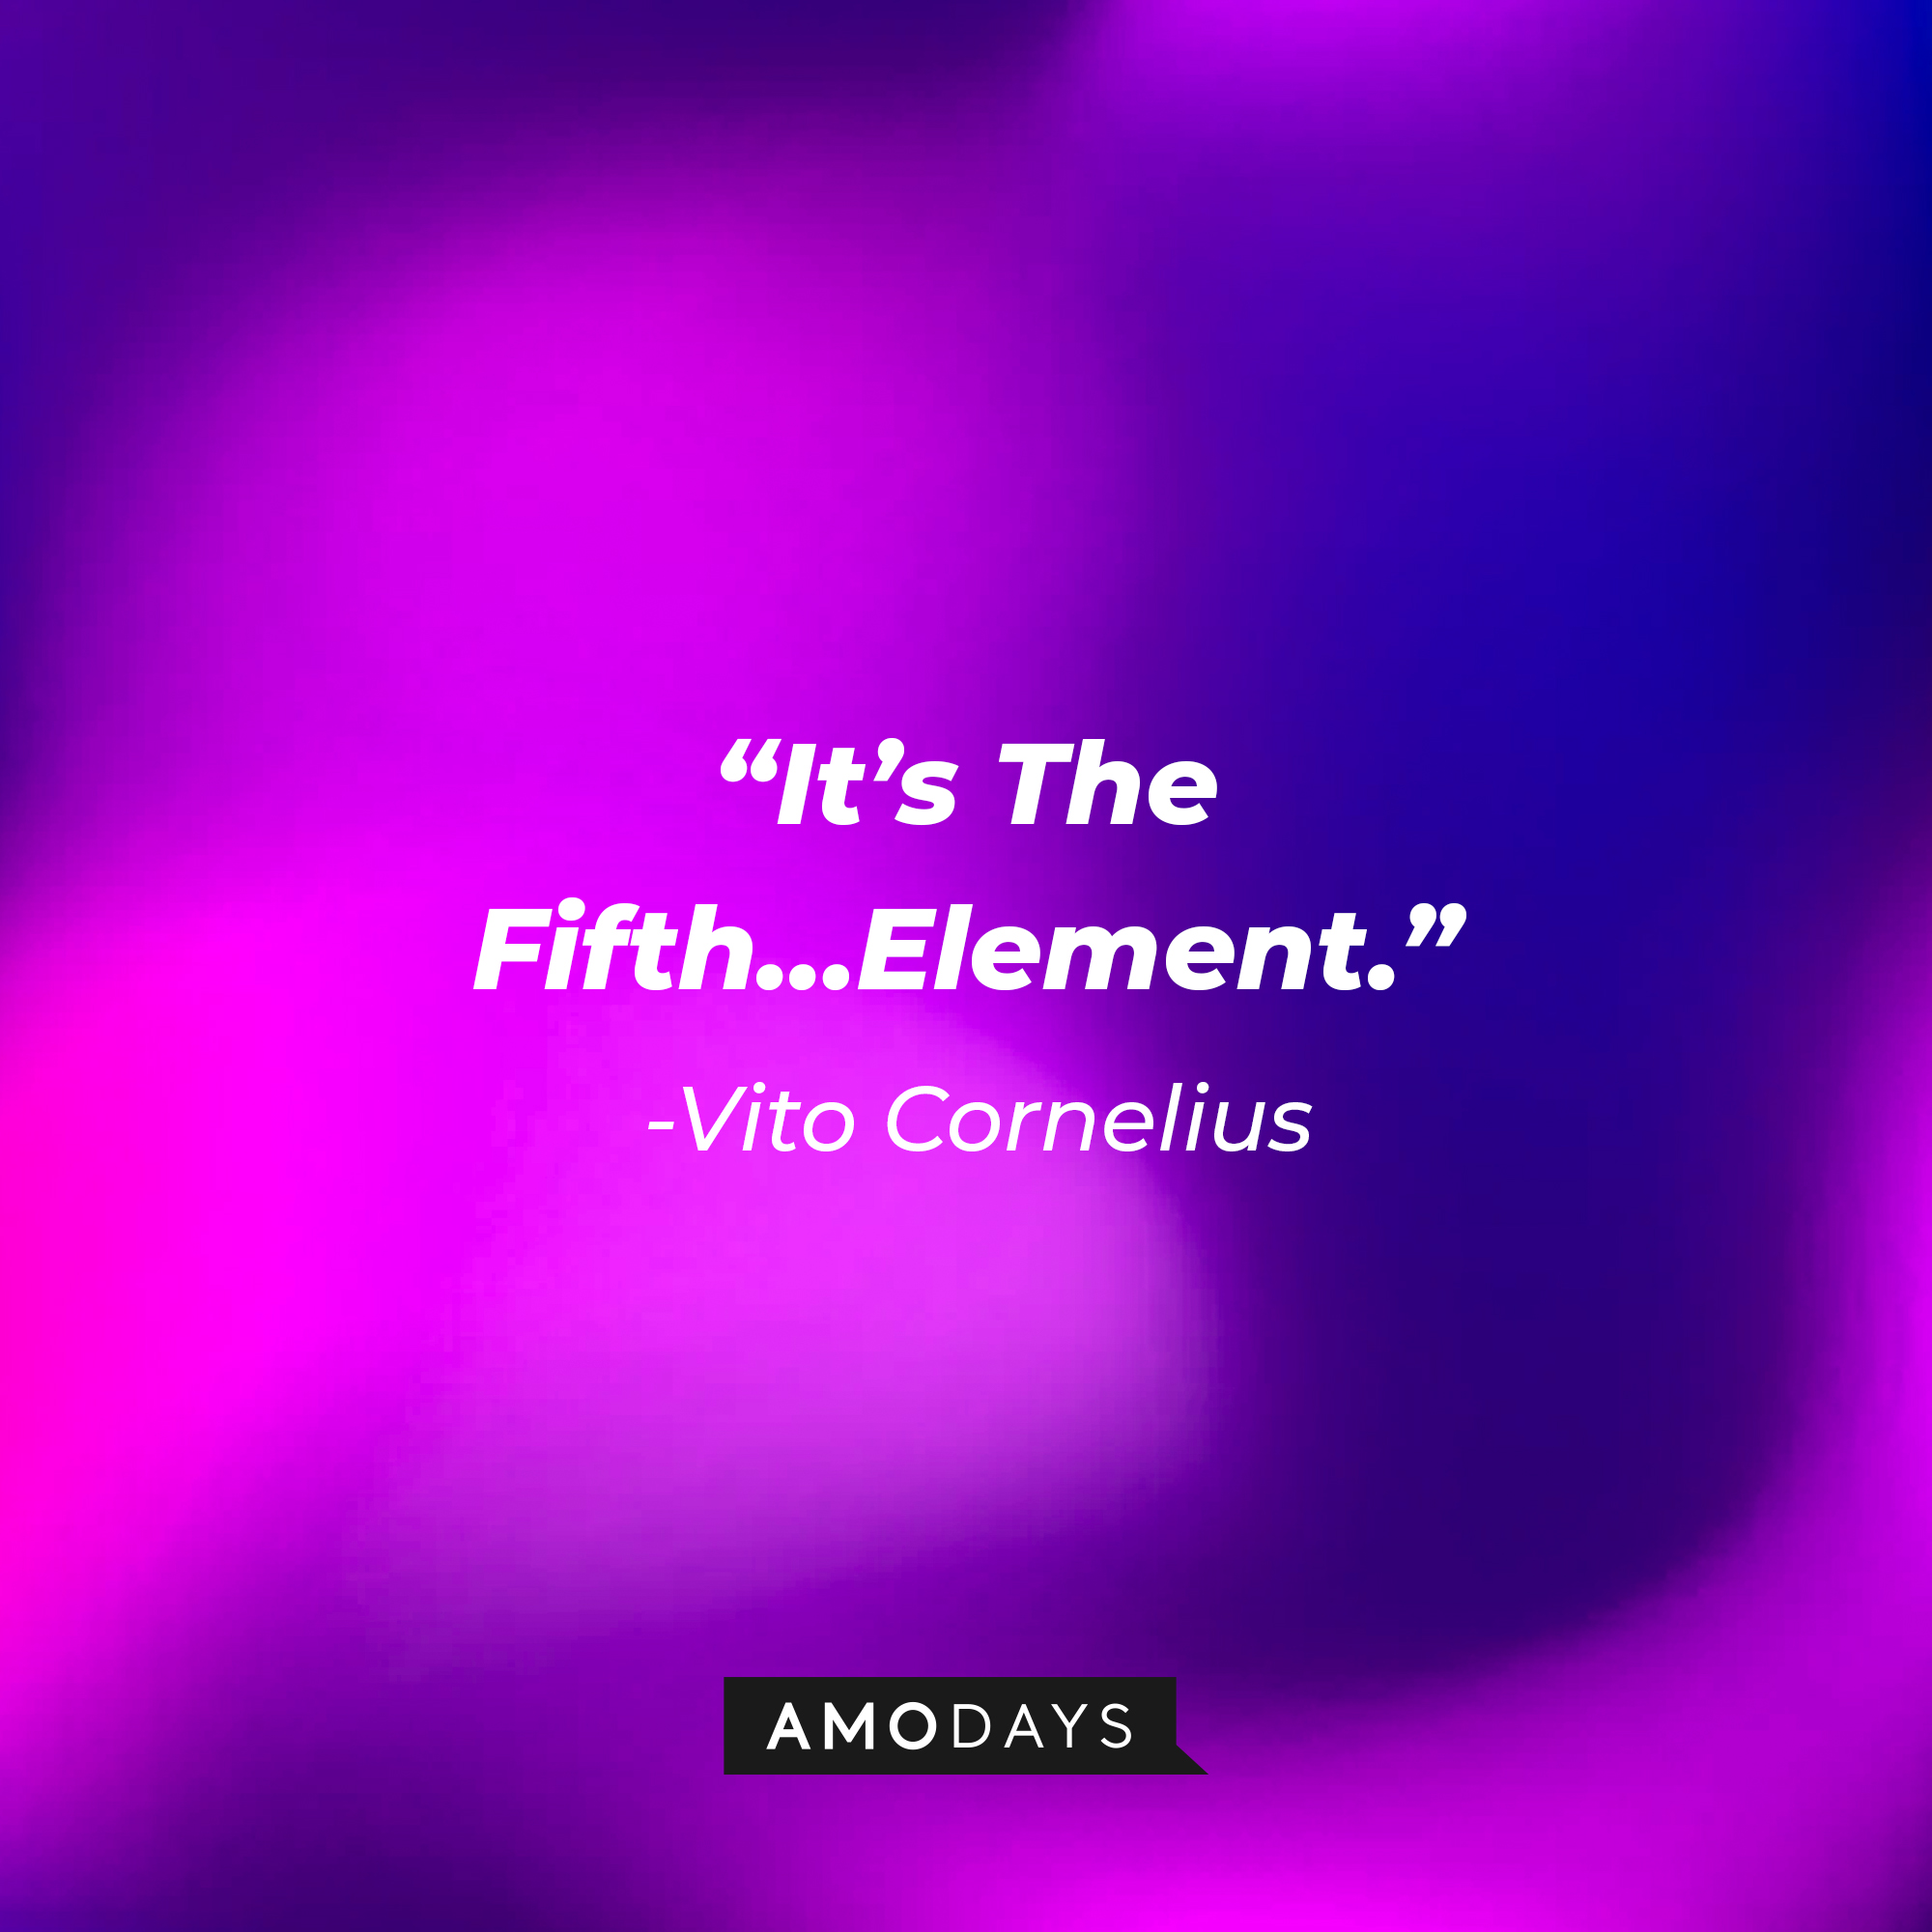 Vito Cornelius' quote: "It's The Fifth...Element" | Source: Amodays